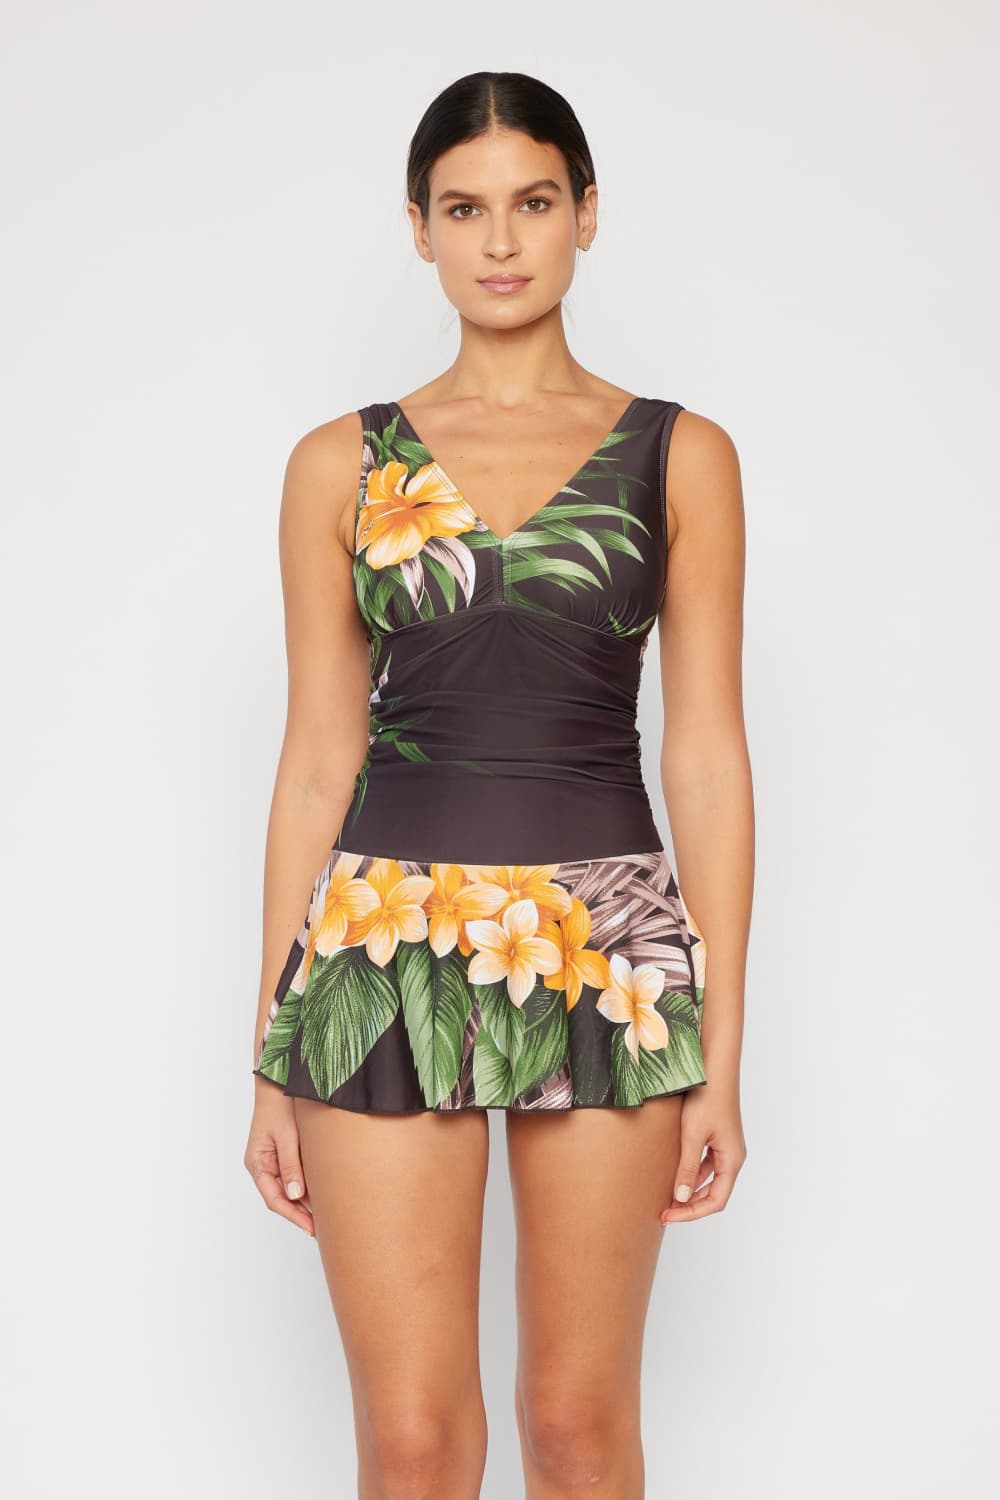 Marina West Swim Full Size Clear Waters Swim Dress in Aloha Brown - Guy Christopher